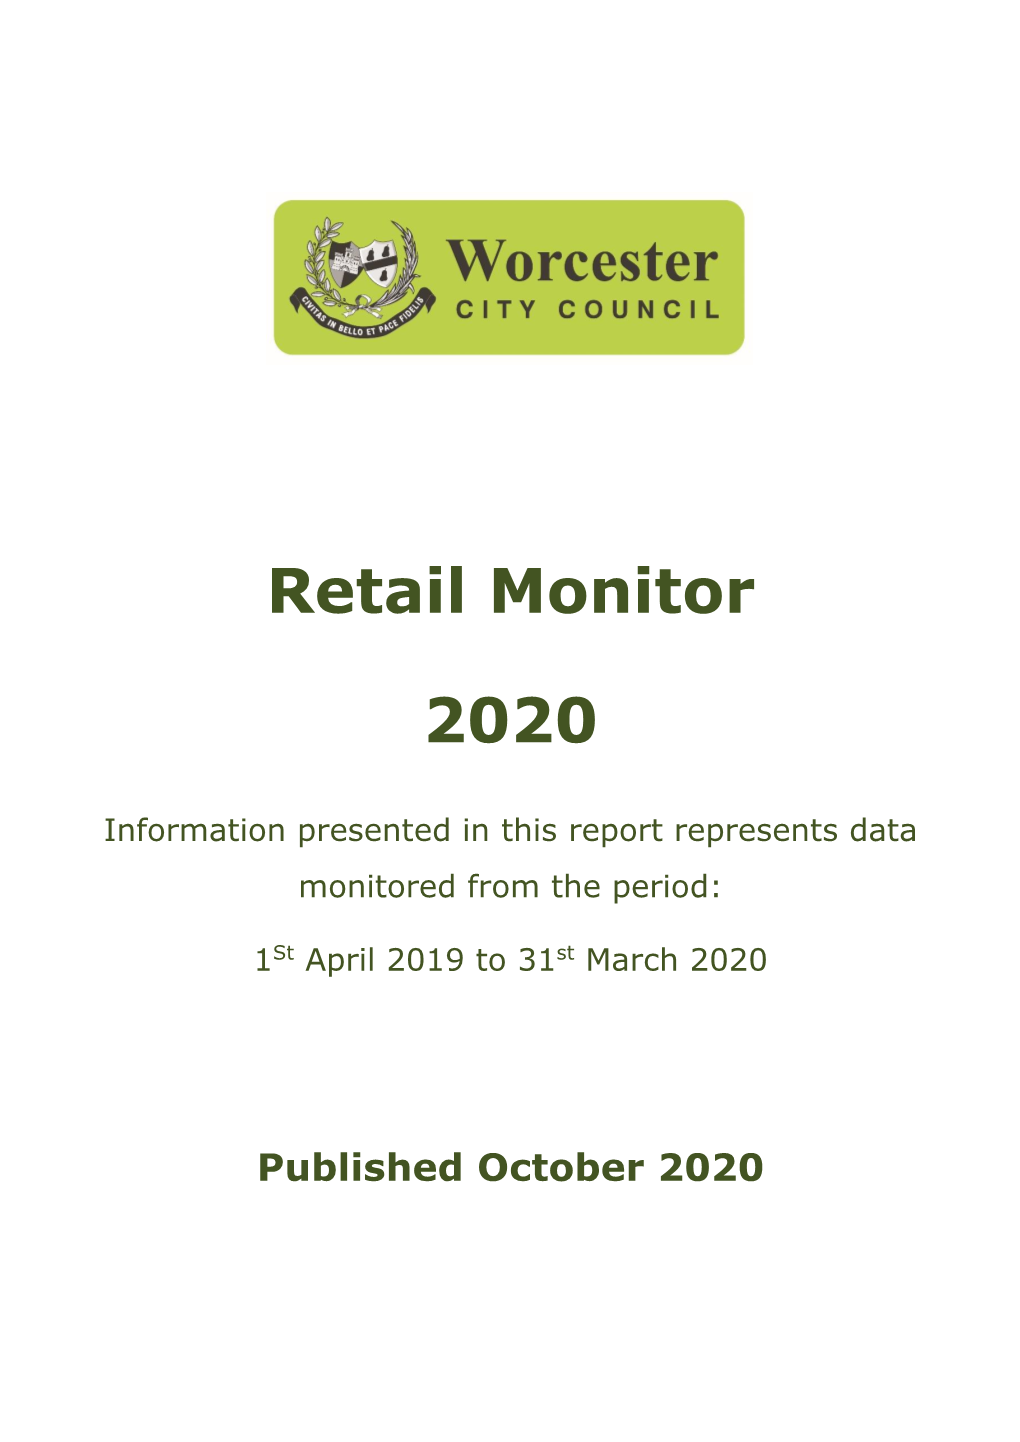 Retail Monitor 2020